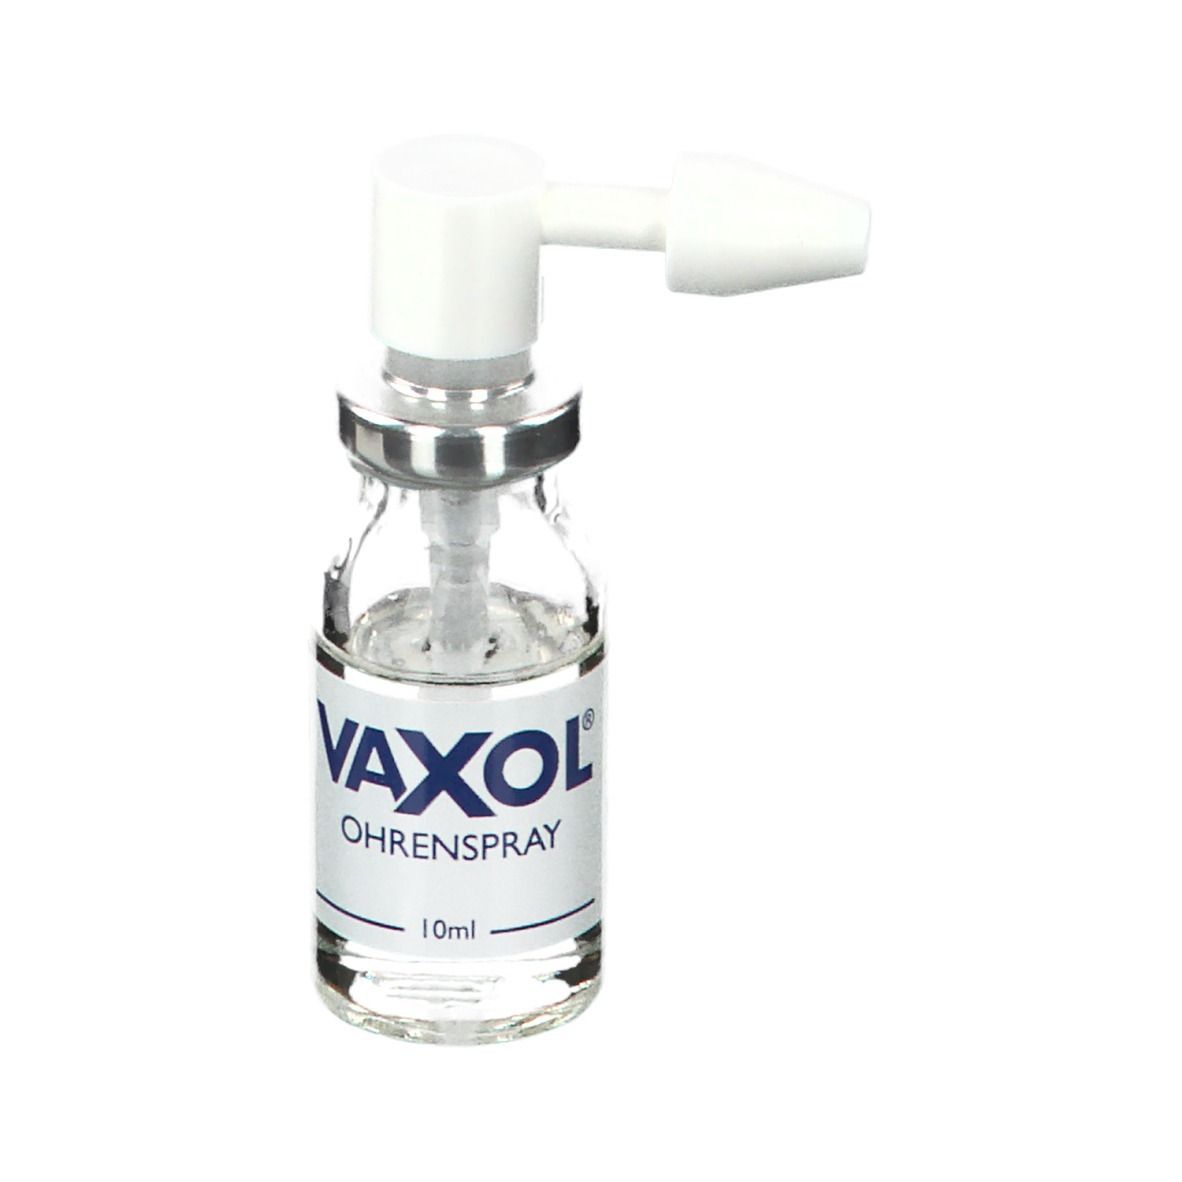 Vaxol® Ohrenspray